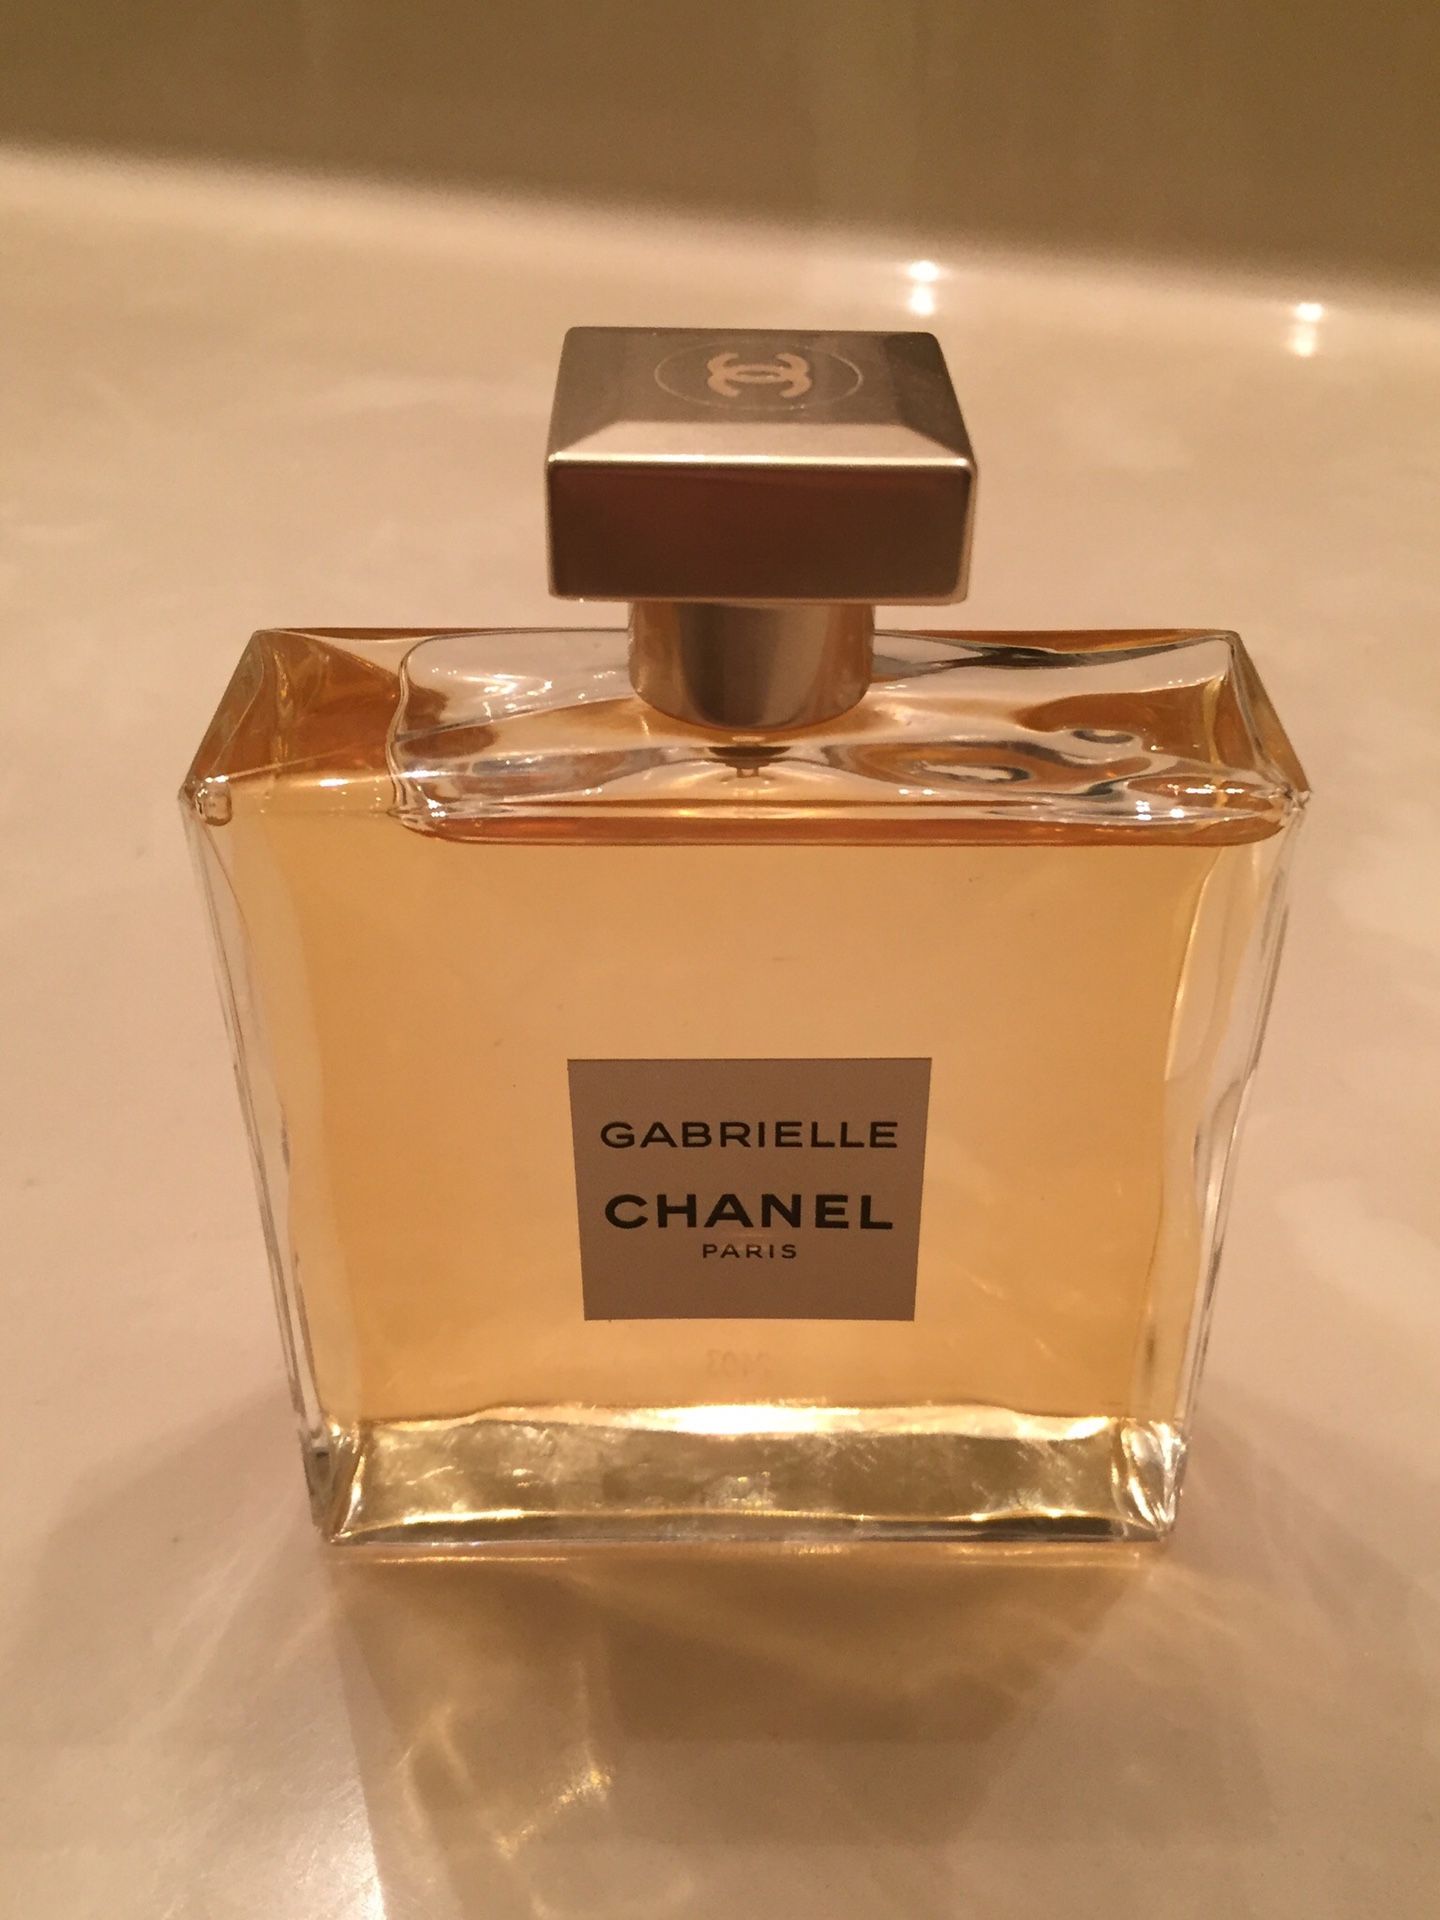 NEW Gabrielle CHANEL Paris perfume, with original box, never used (100ml, 3.4oz)